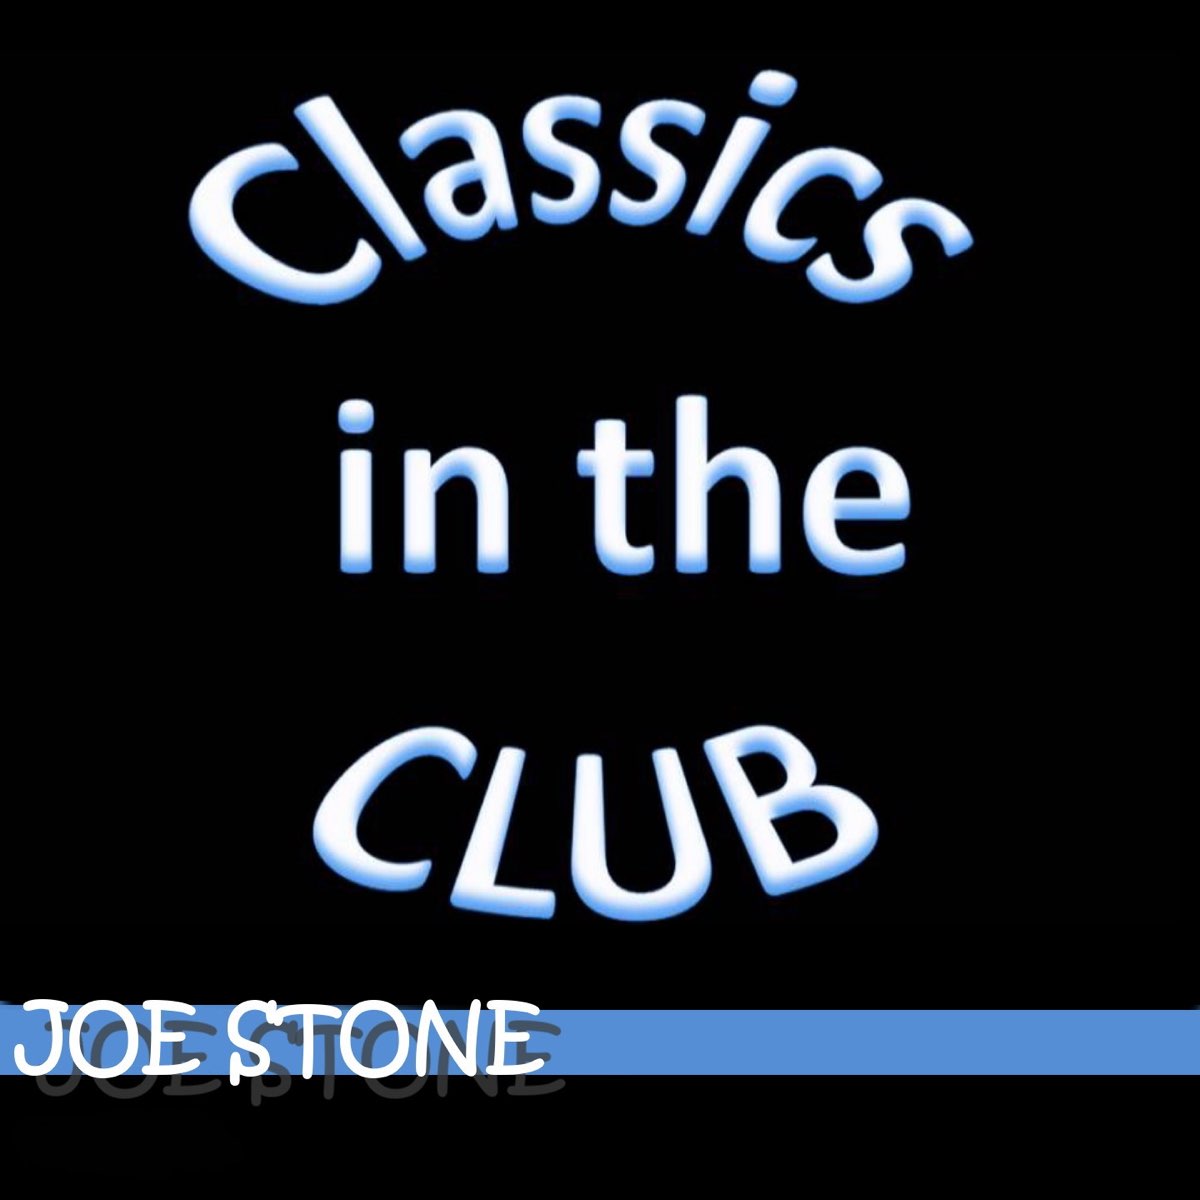 Joe Stone make Love.